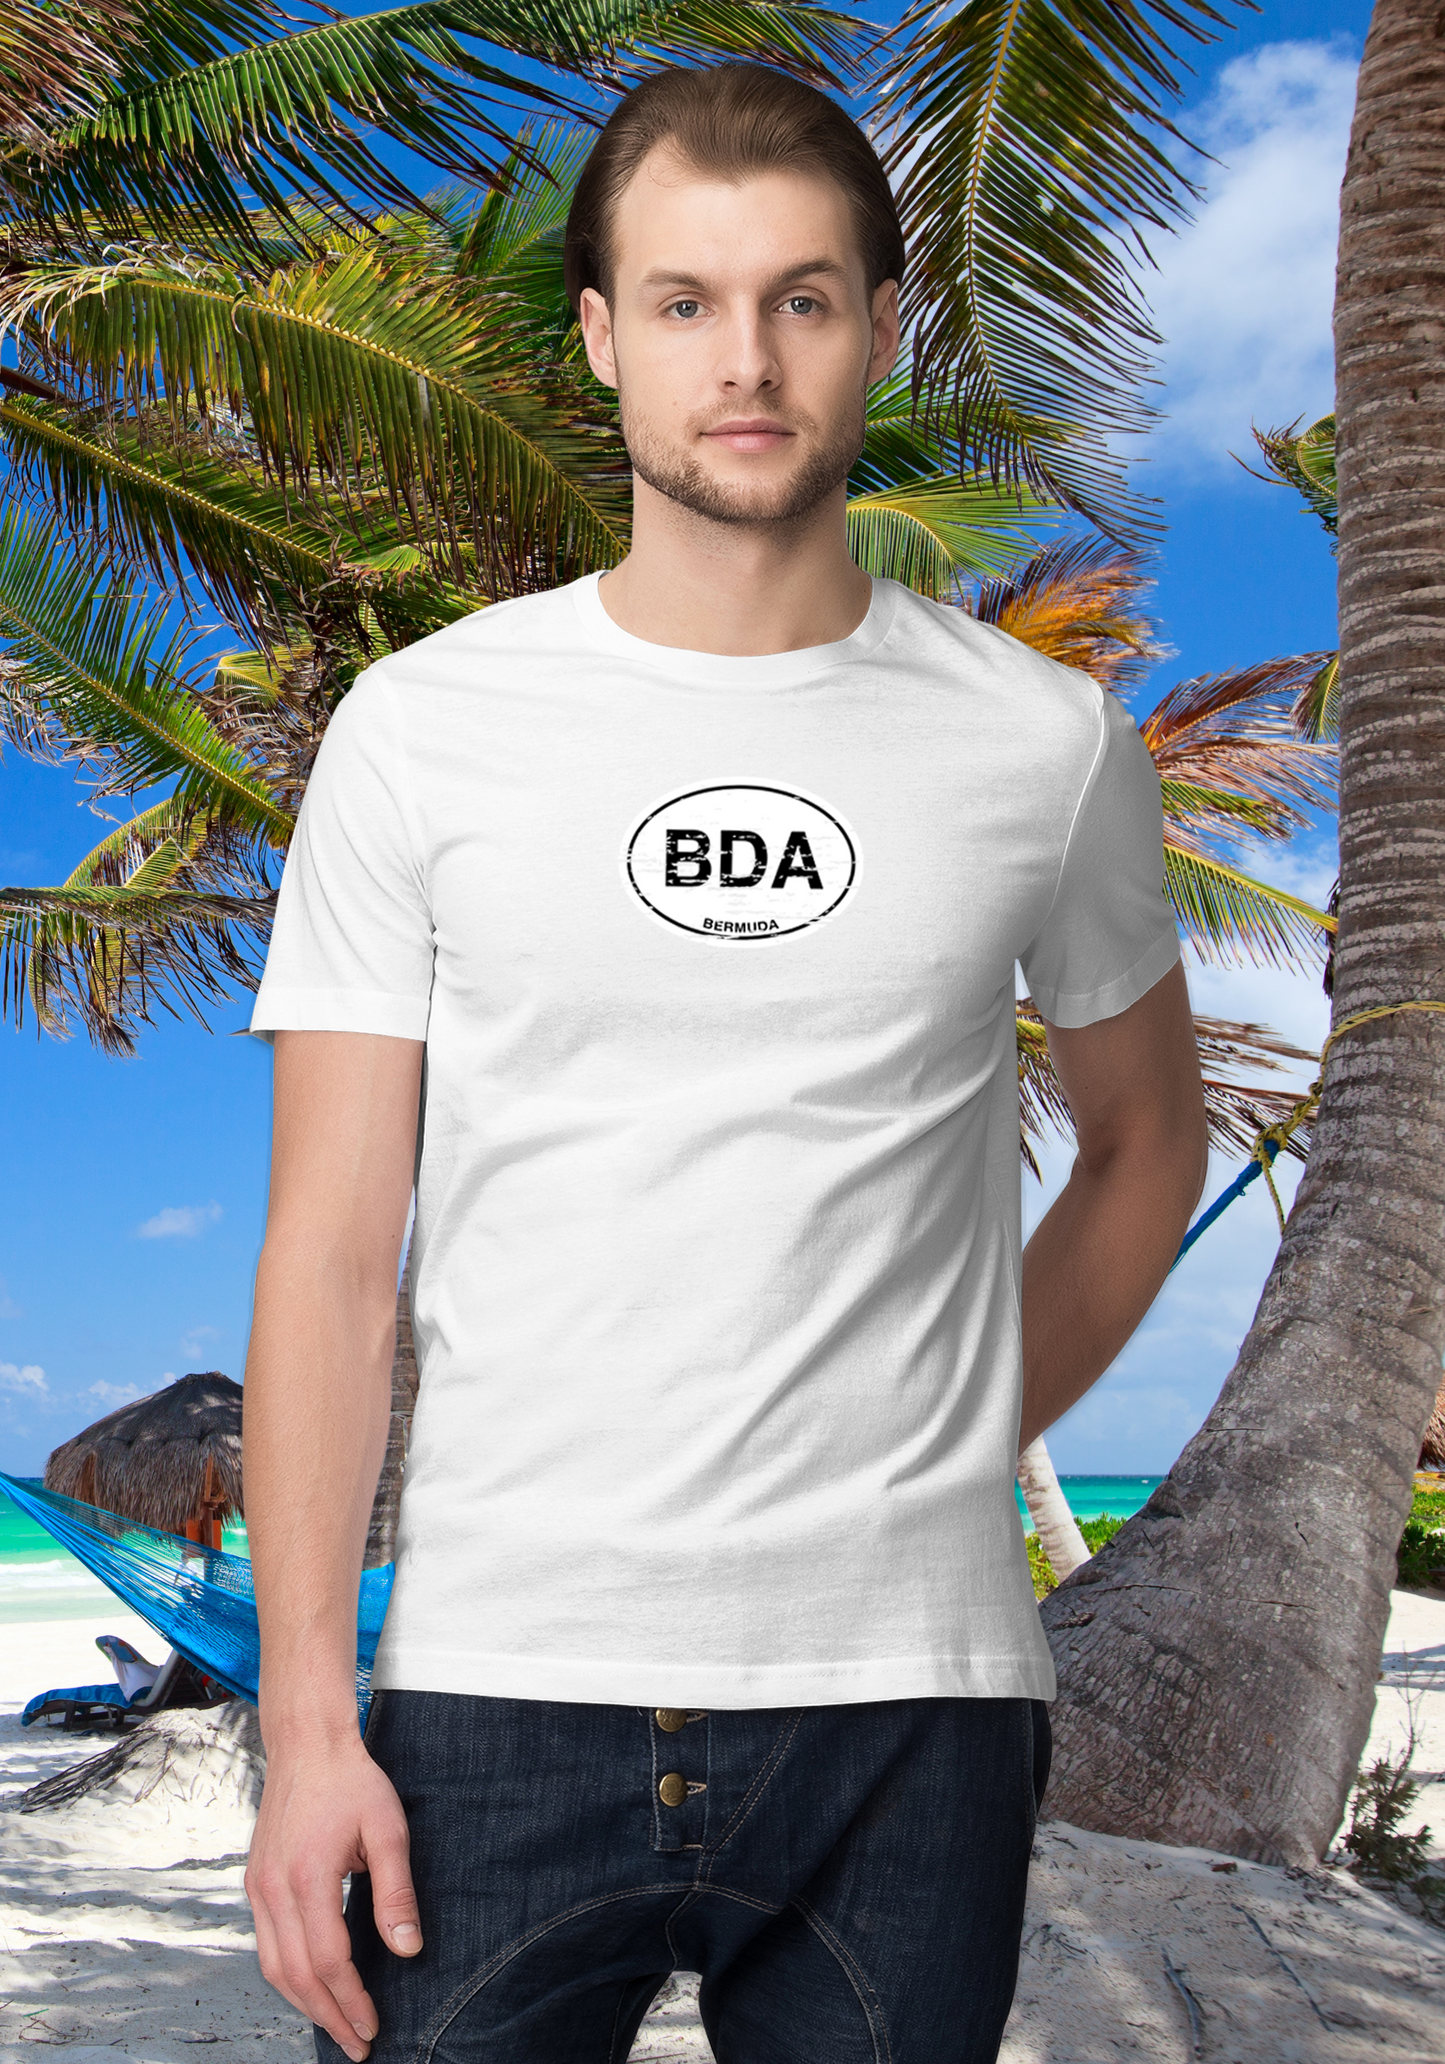 Bermuda Men's Classic T-Shirt Souvenirs - My Destination Location